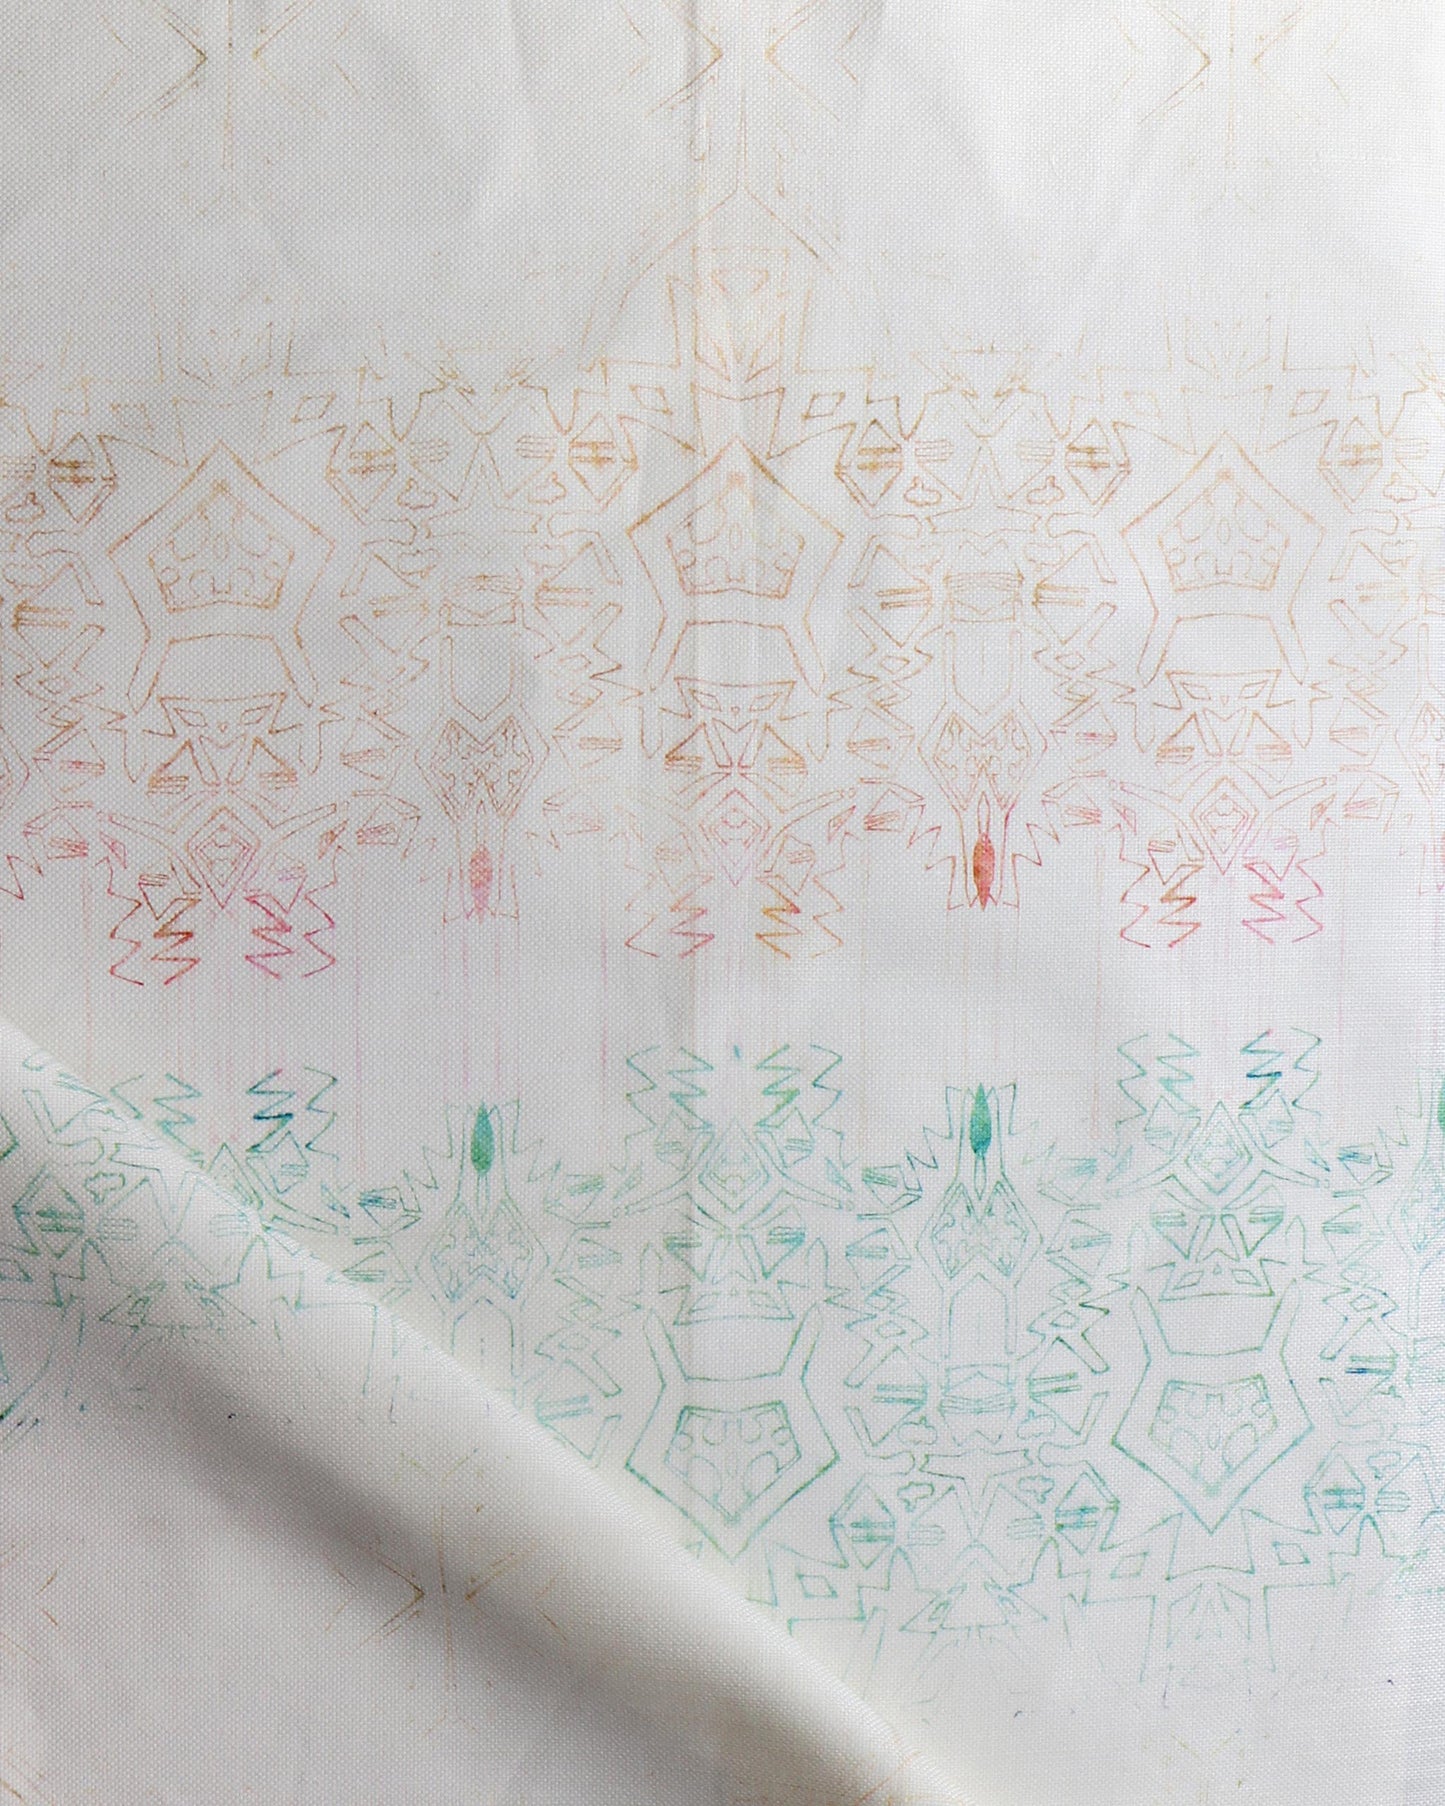 A white piece of Akimbo 1 Fabric with a luxurious geometric pattern